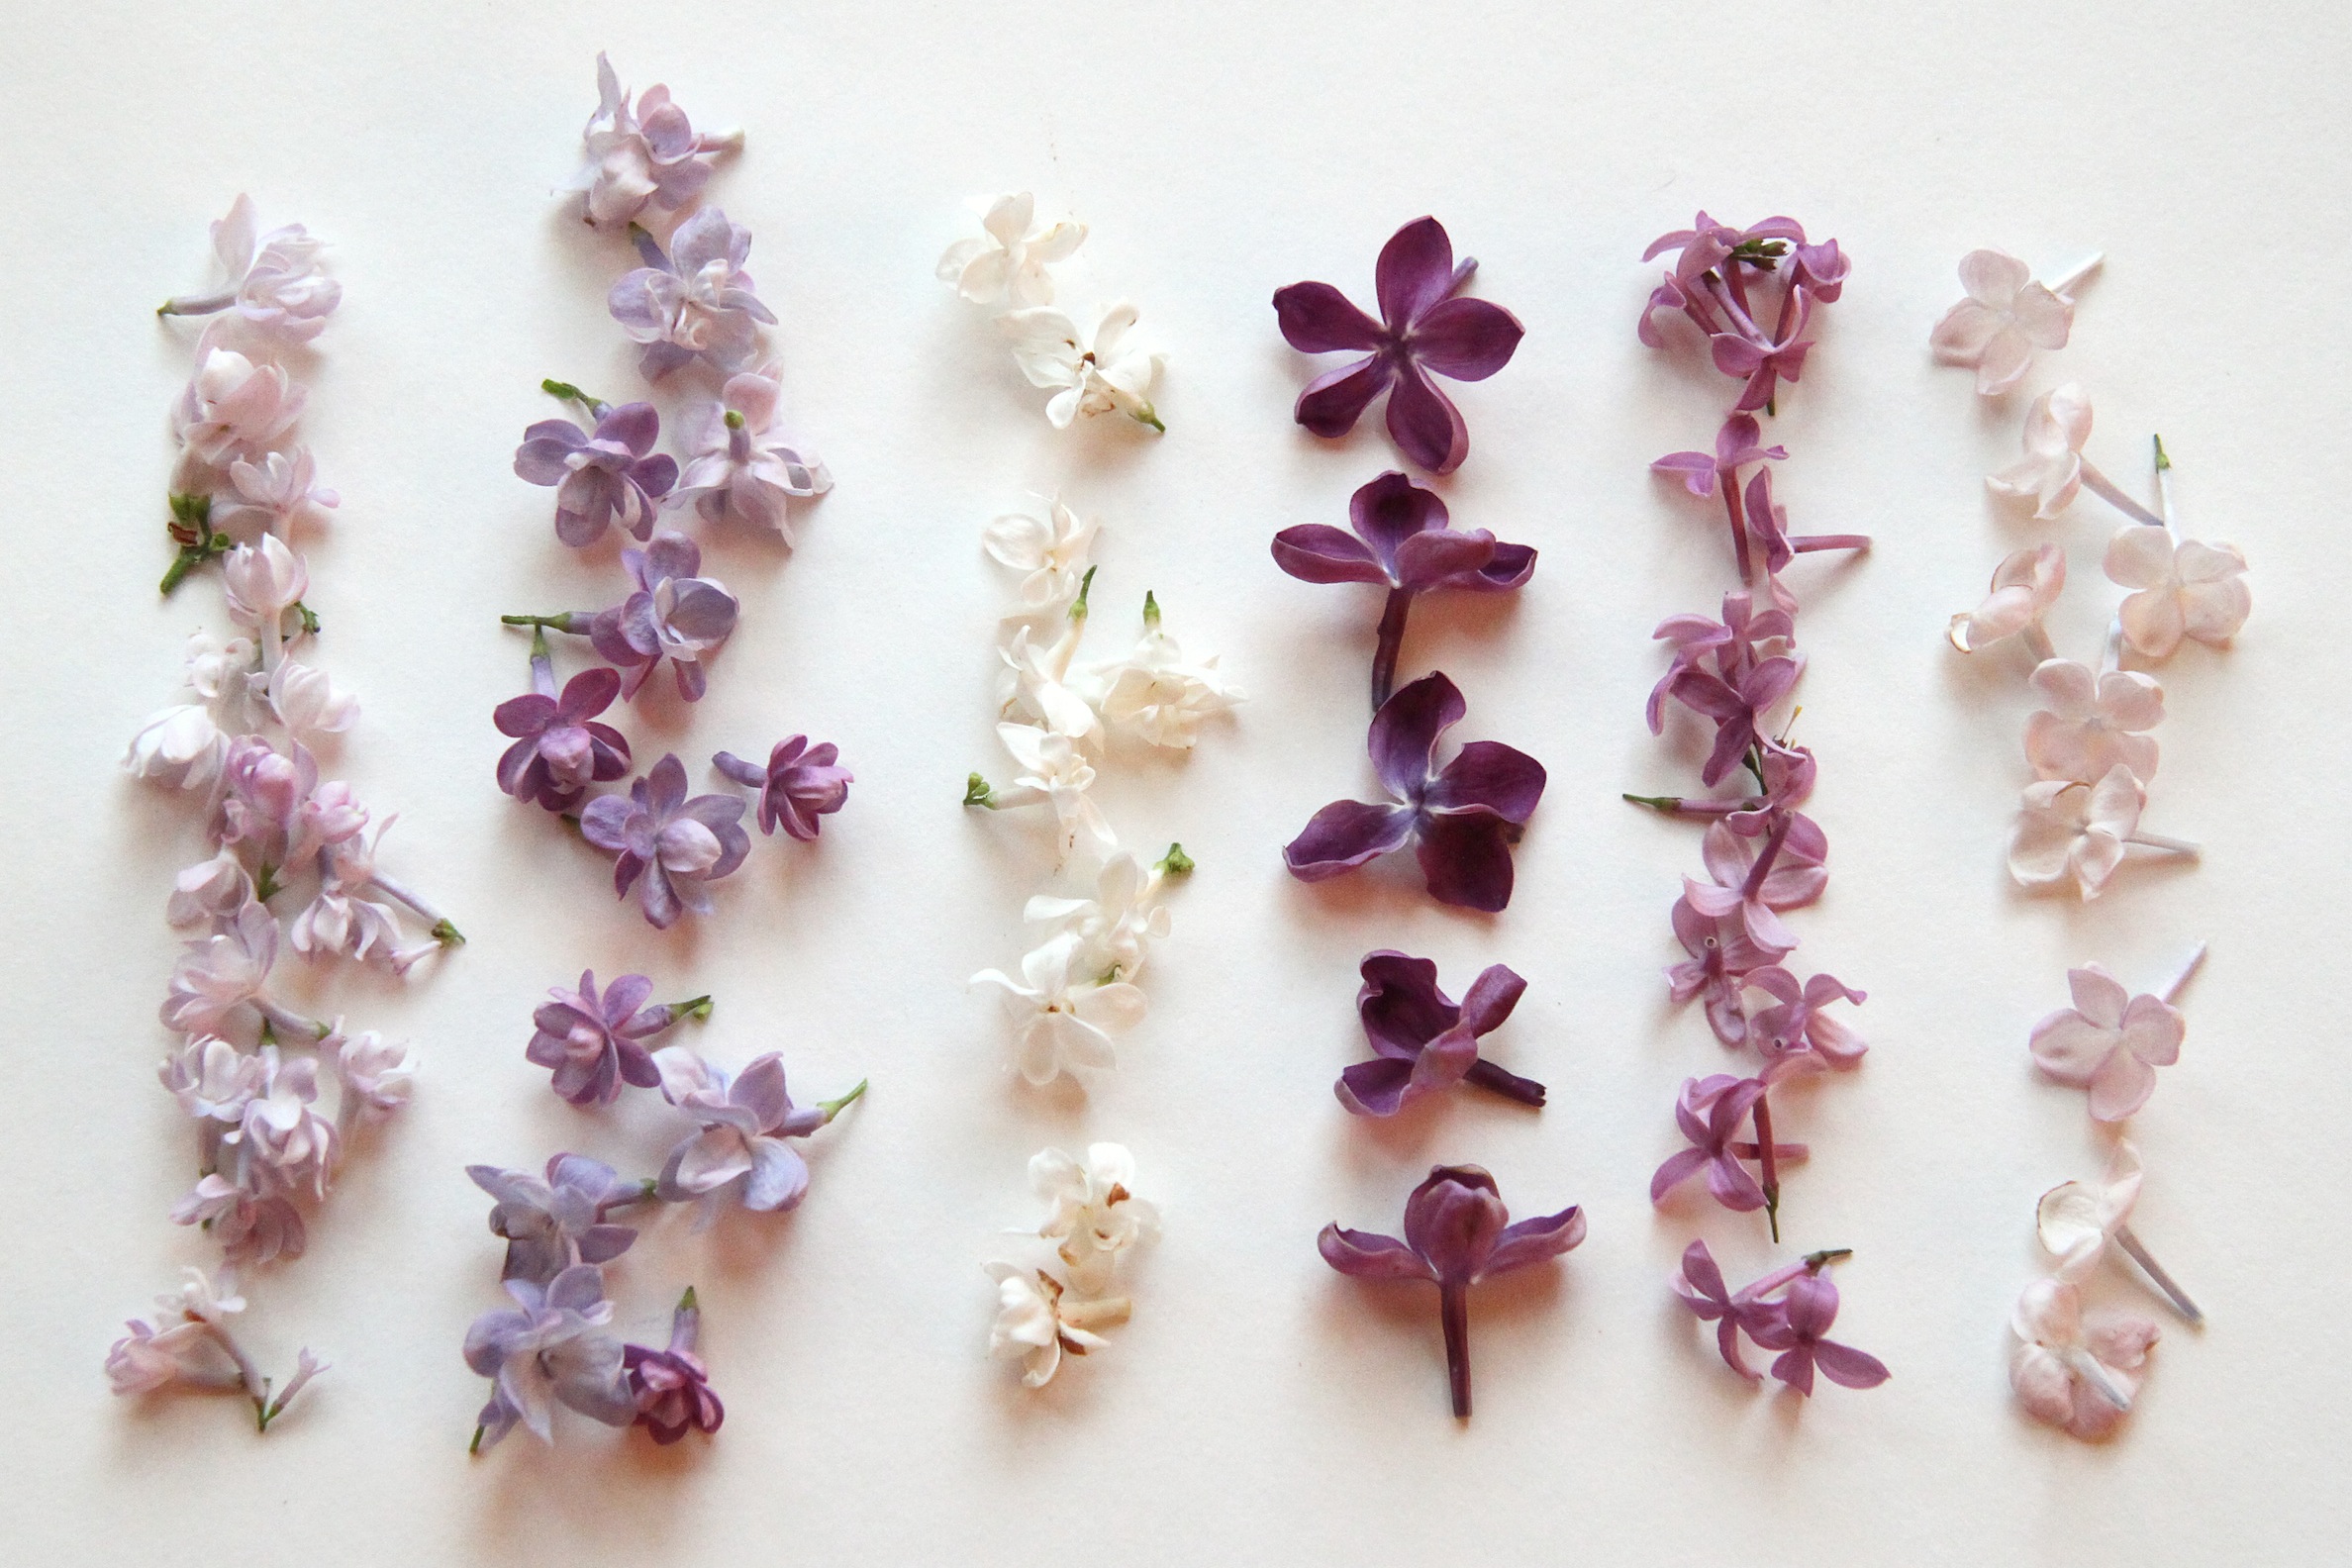 lilac variations